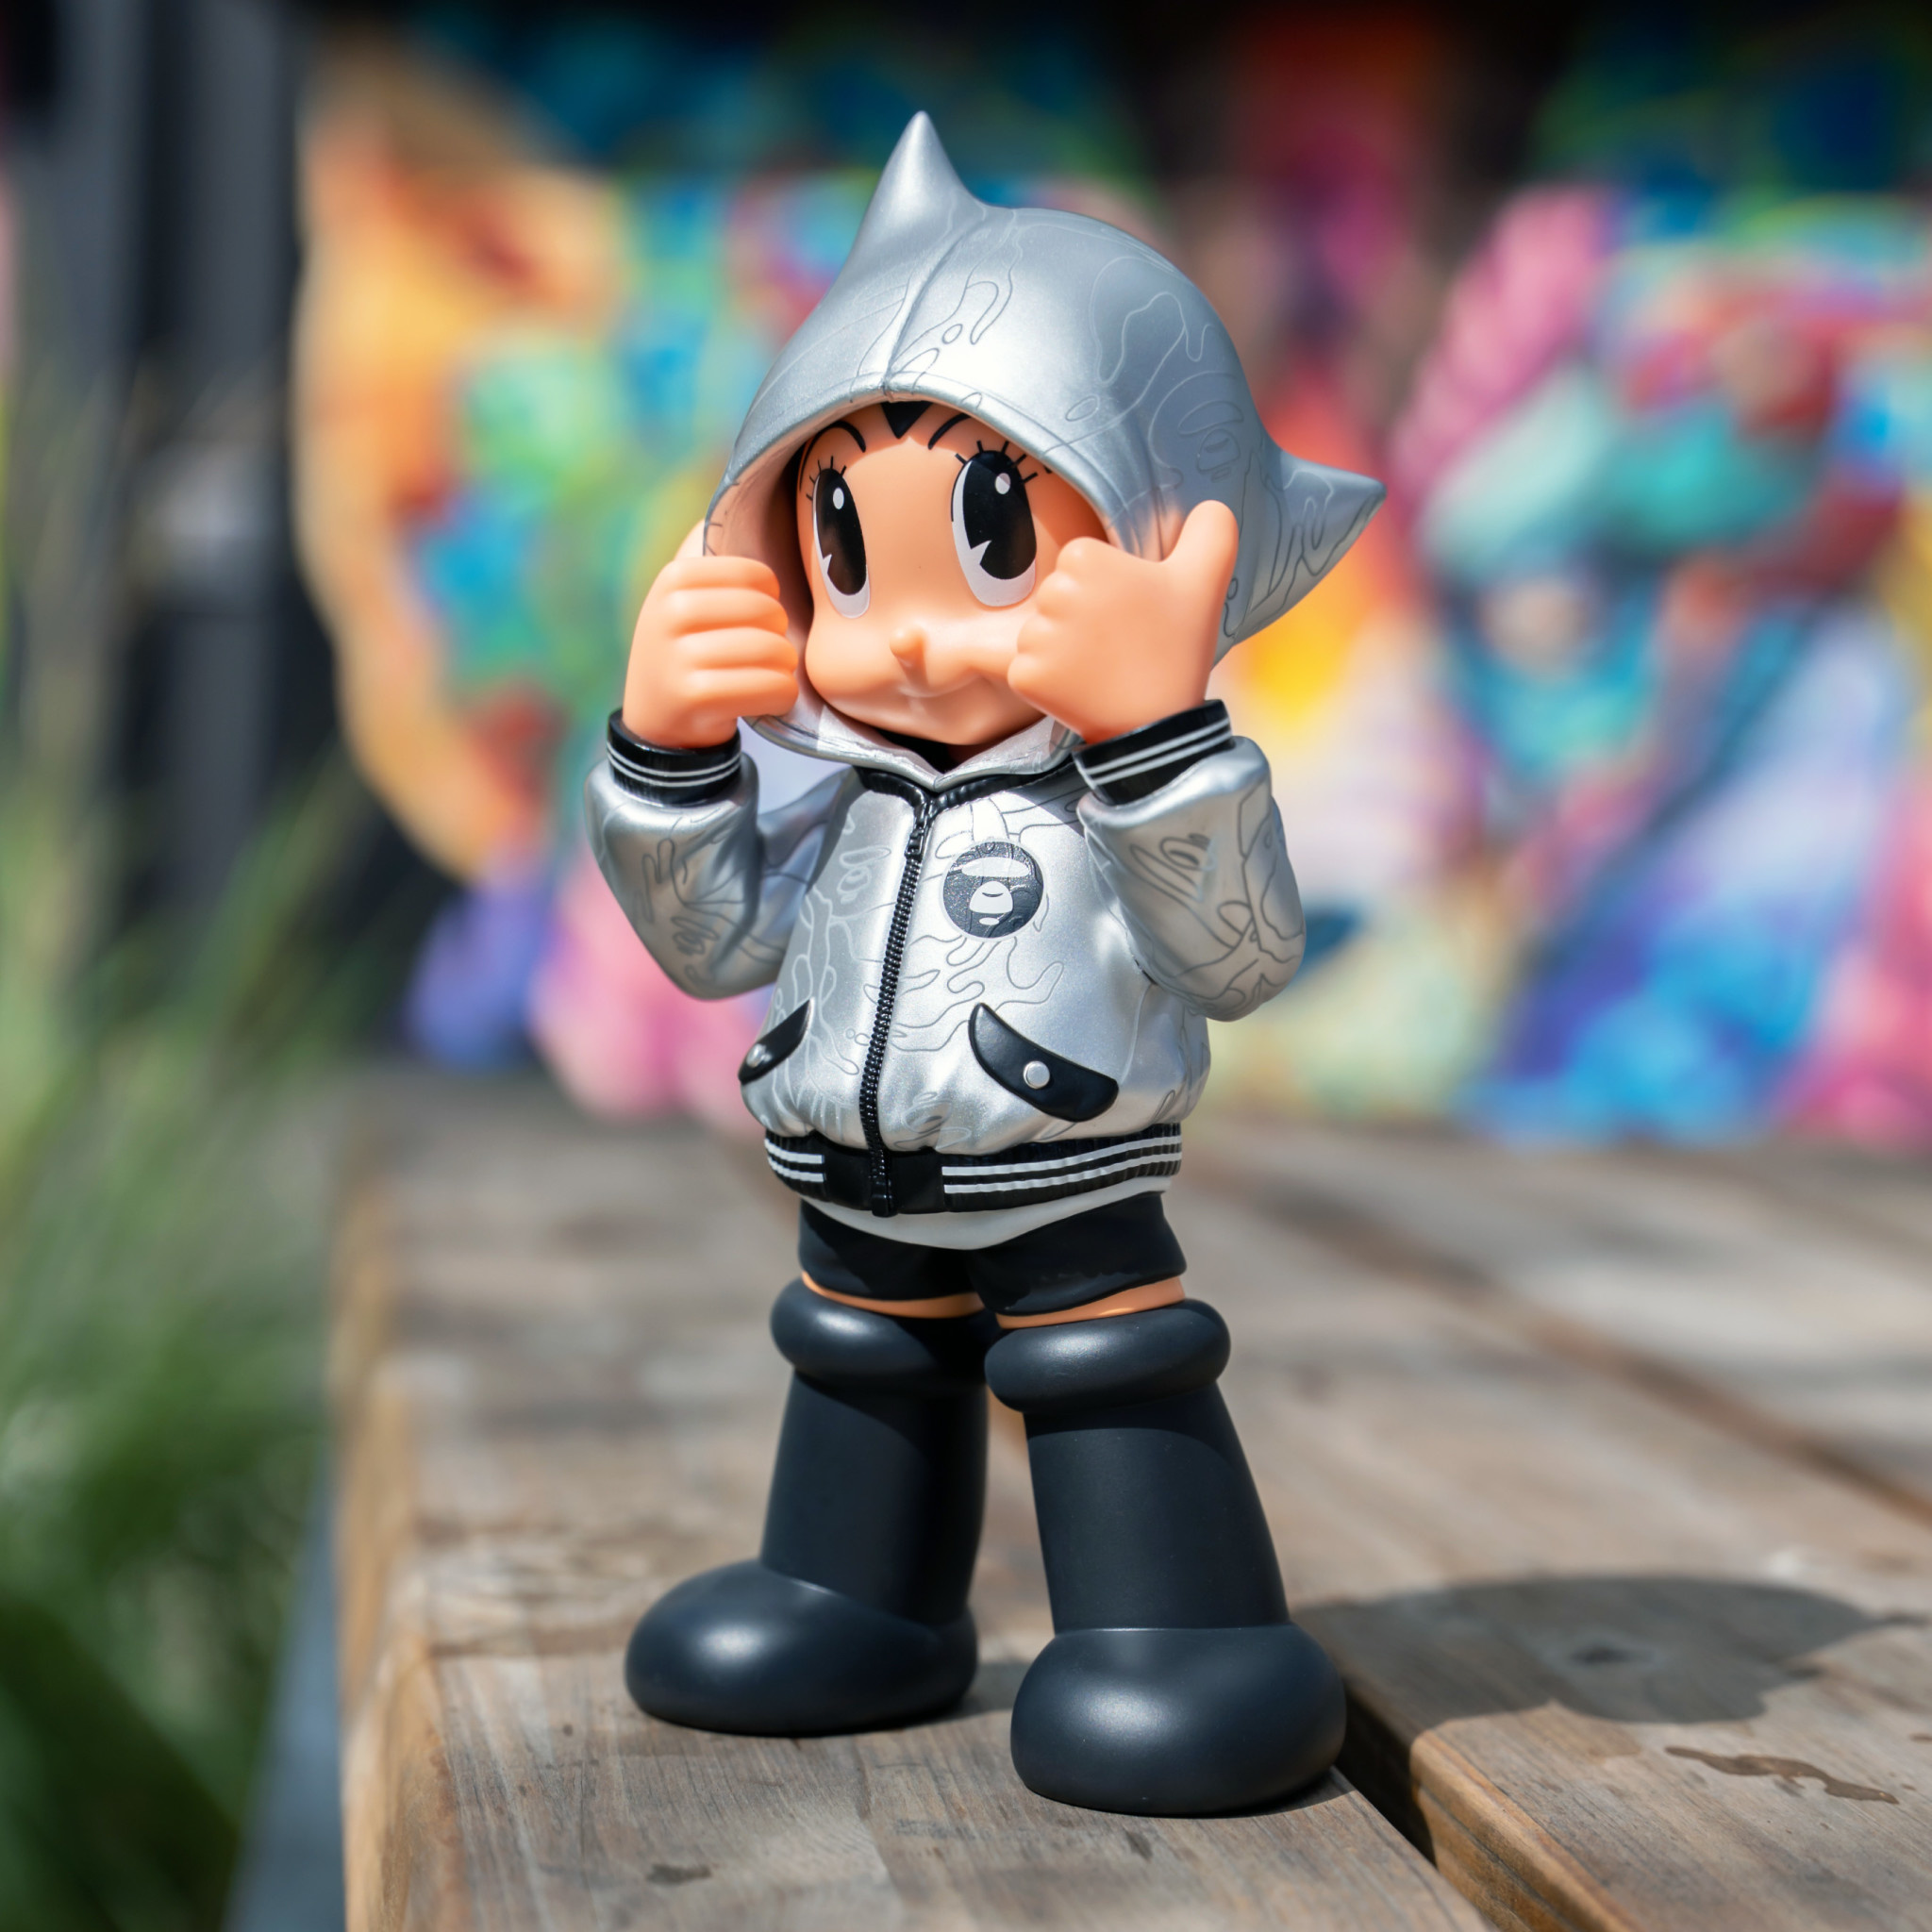 ToyQube BBC Astro Boy Hoodie Figure Camo | givingbackpodcast.com